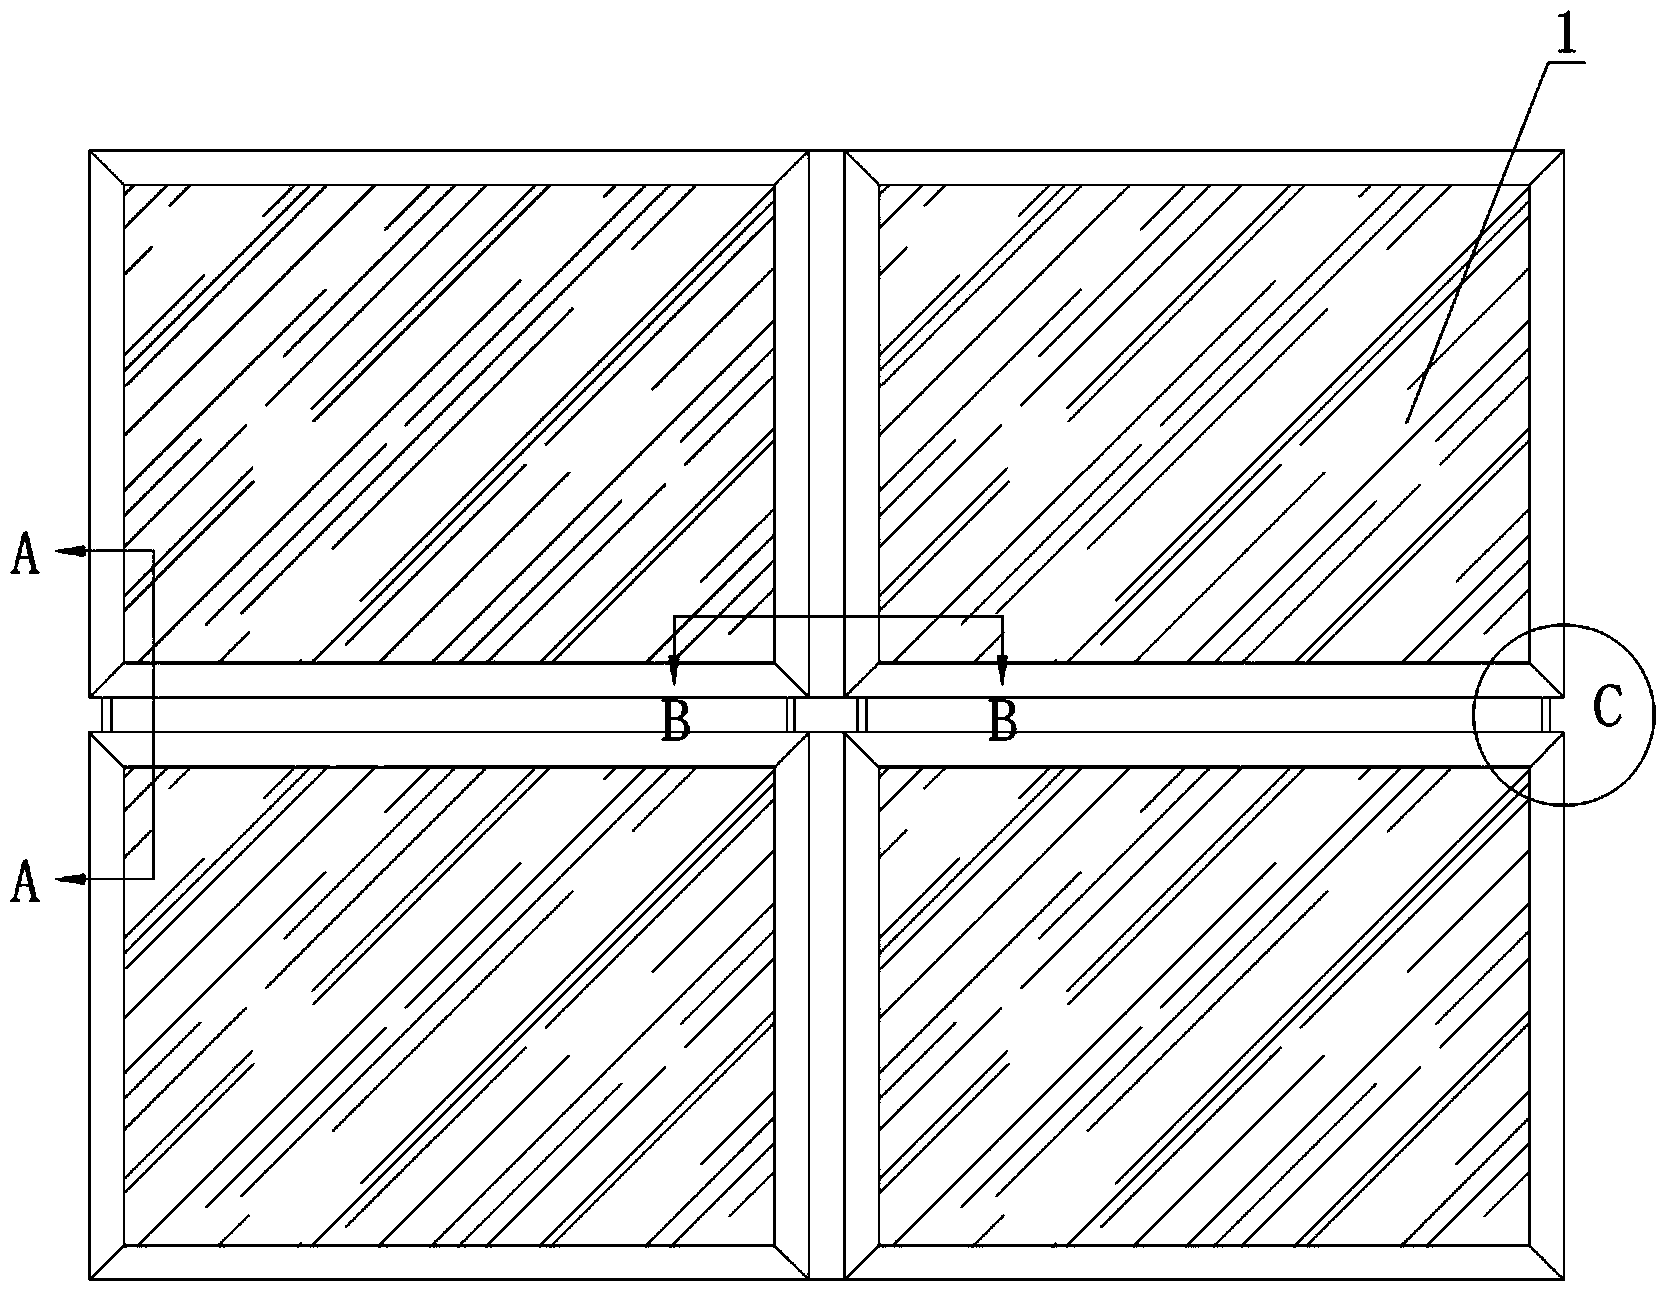 Ventilation transverse locking type unit curtain wall system